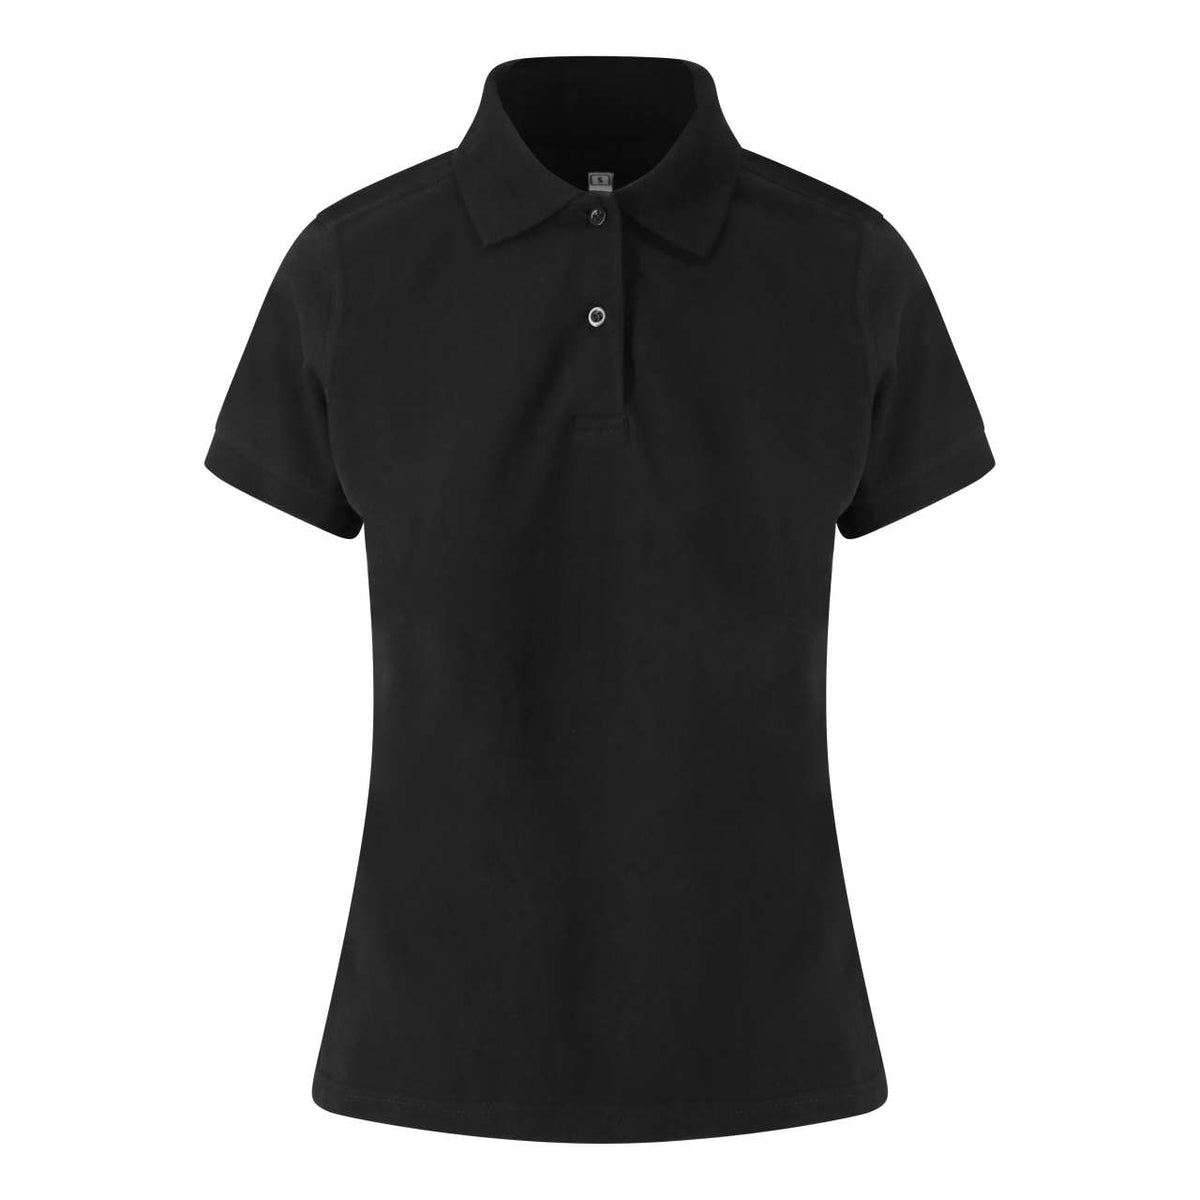 Just Polos Damen Polo Shirt T-Shirt Lady-Fit Poloshirt Polohemd